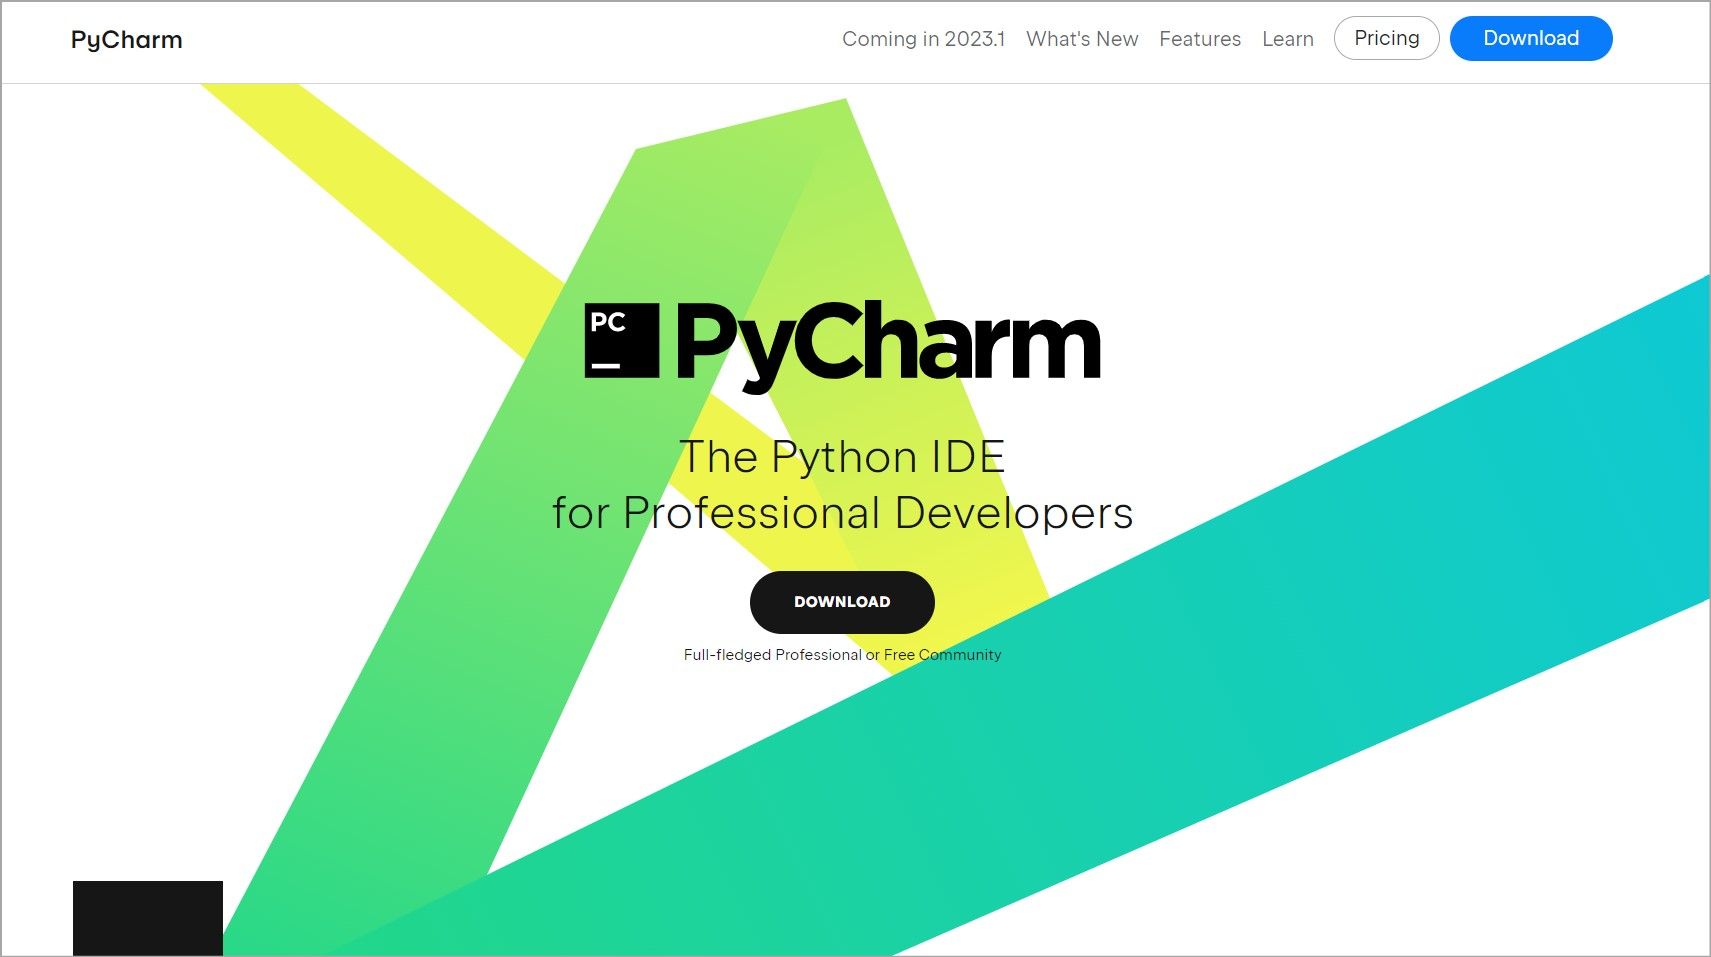 pycharm homepage